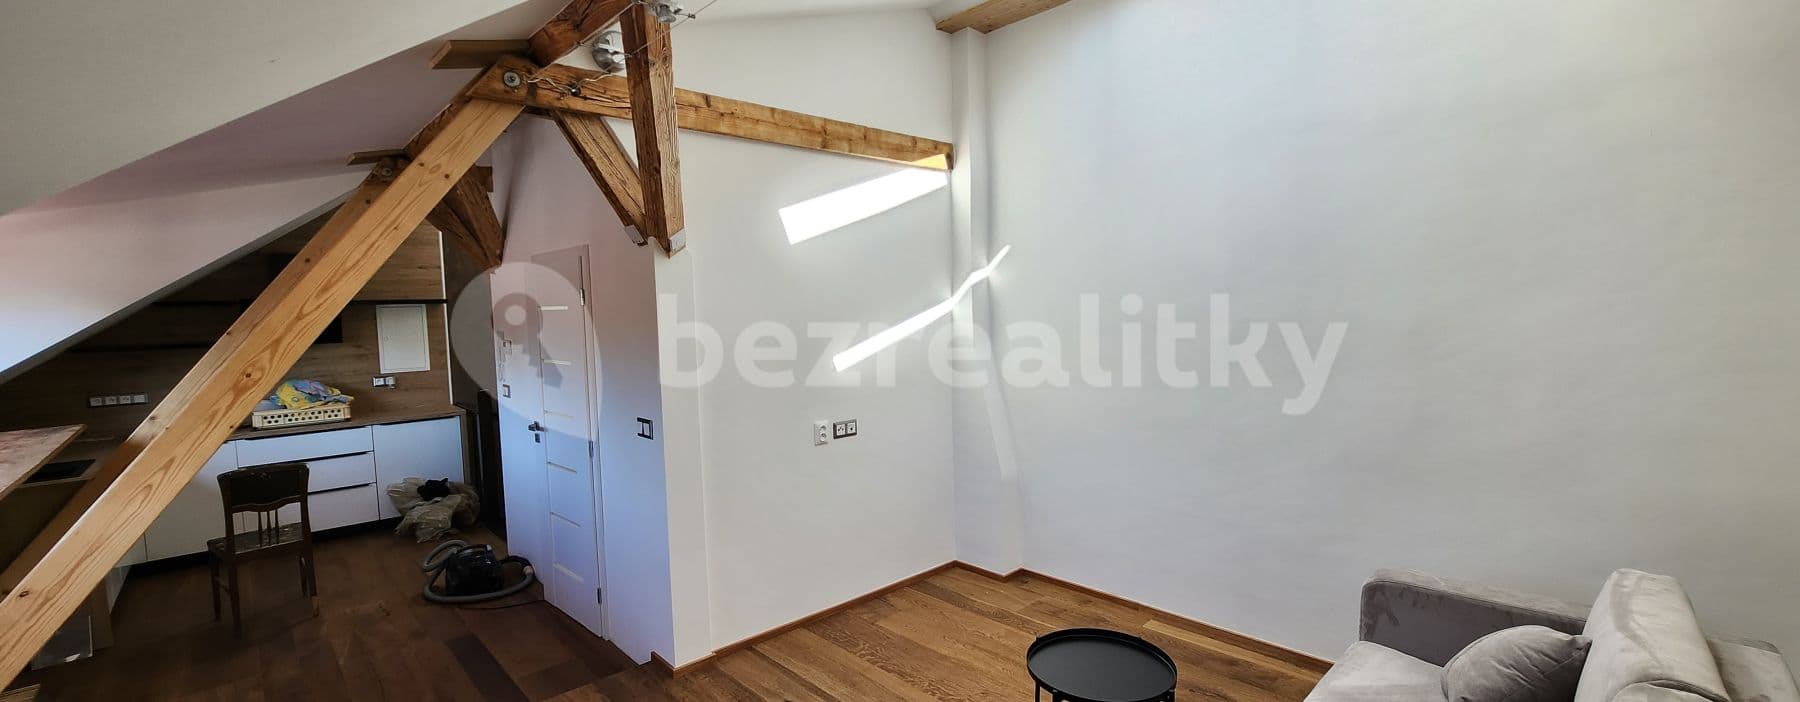 Pronájem bytu 1+1 32 m², V Podbabě, Praha, Praha